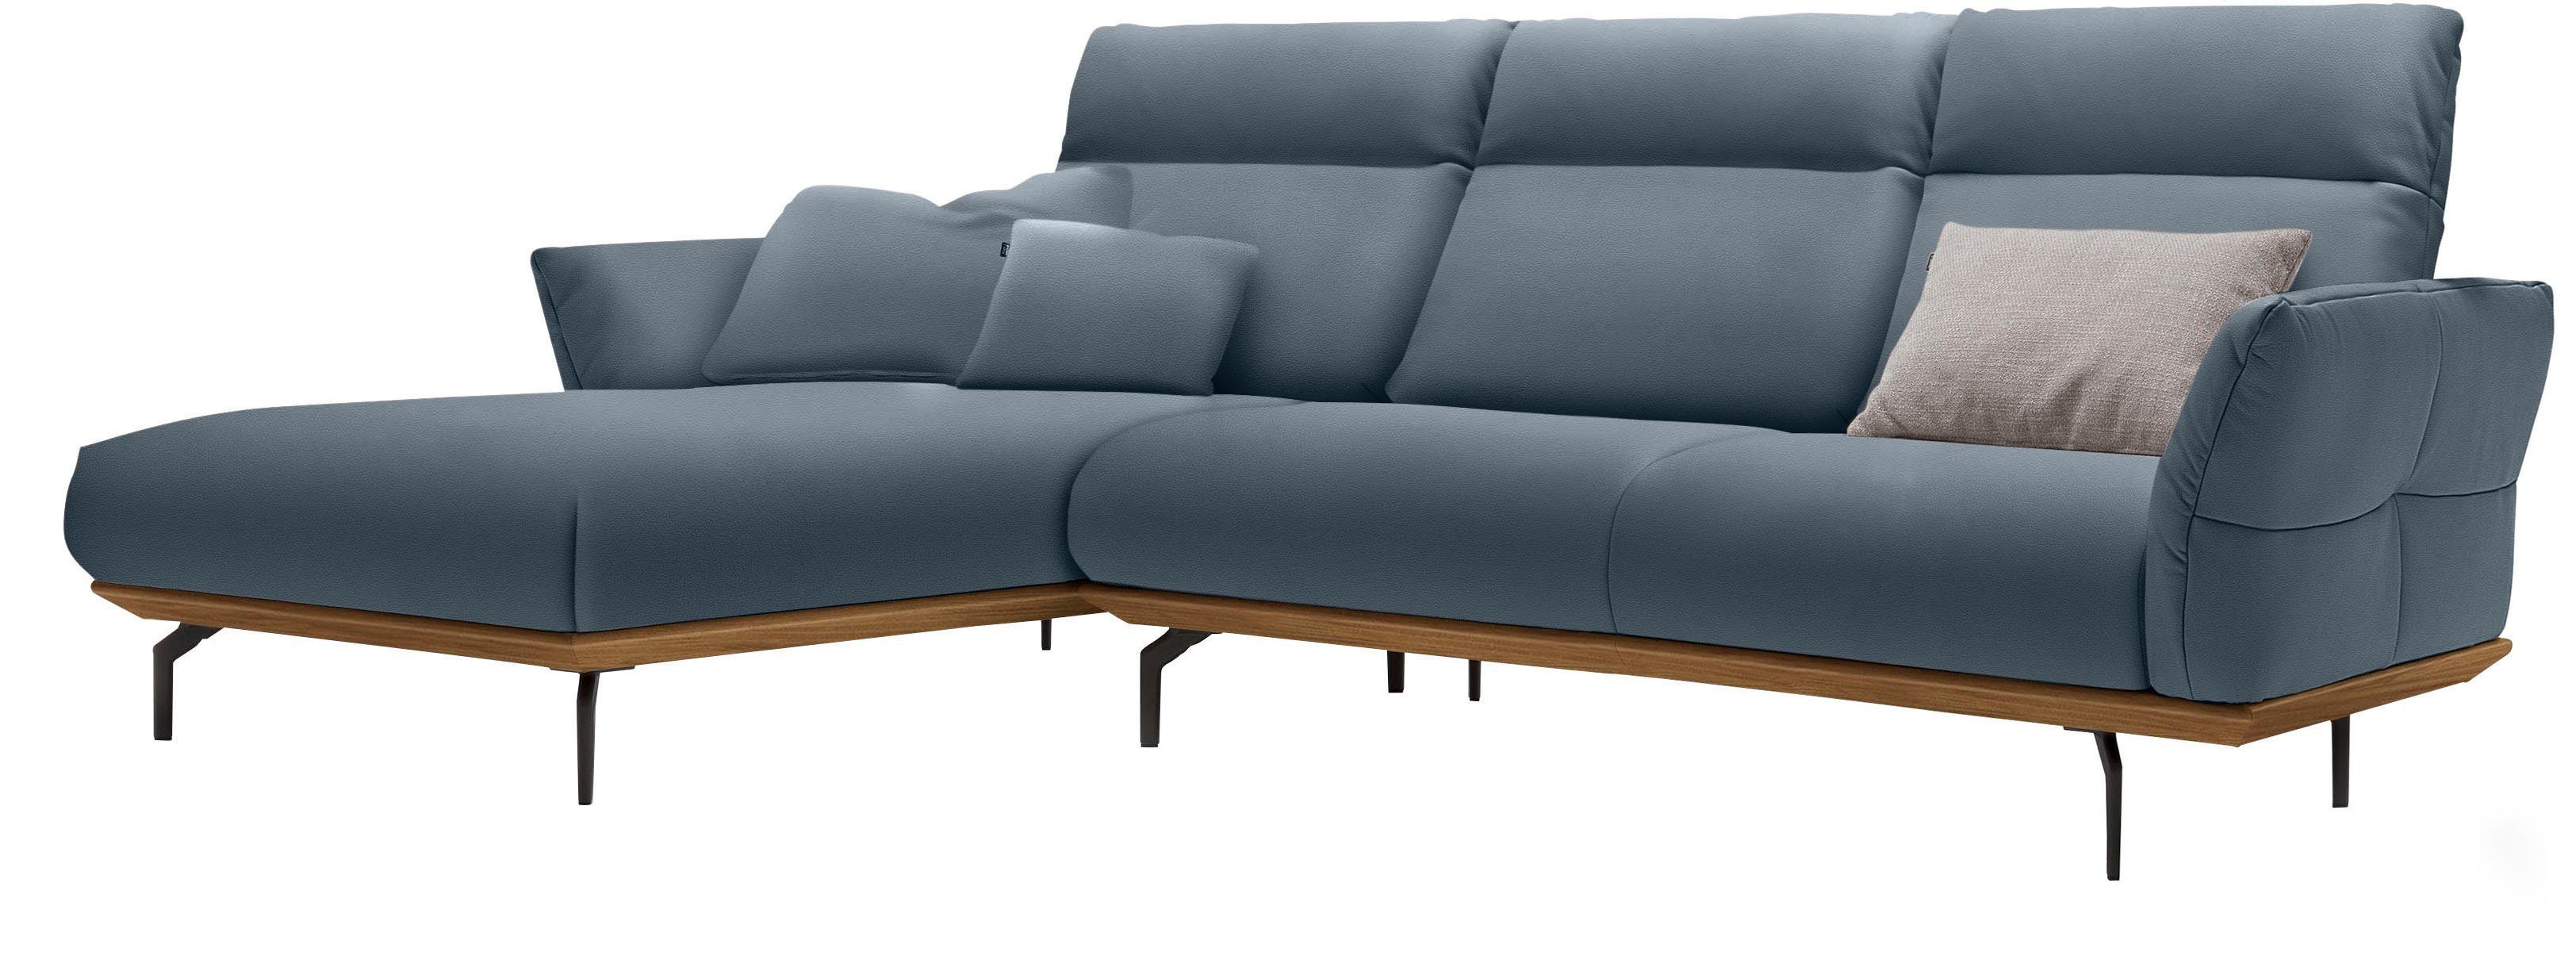 hülsta sofa Ecksofa hs.460, cm Sockel Breite Nussbaum, Winkelfüße in in Umbragrau, 298